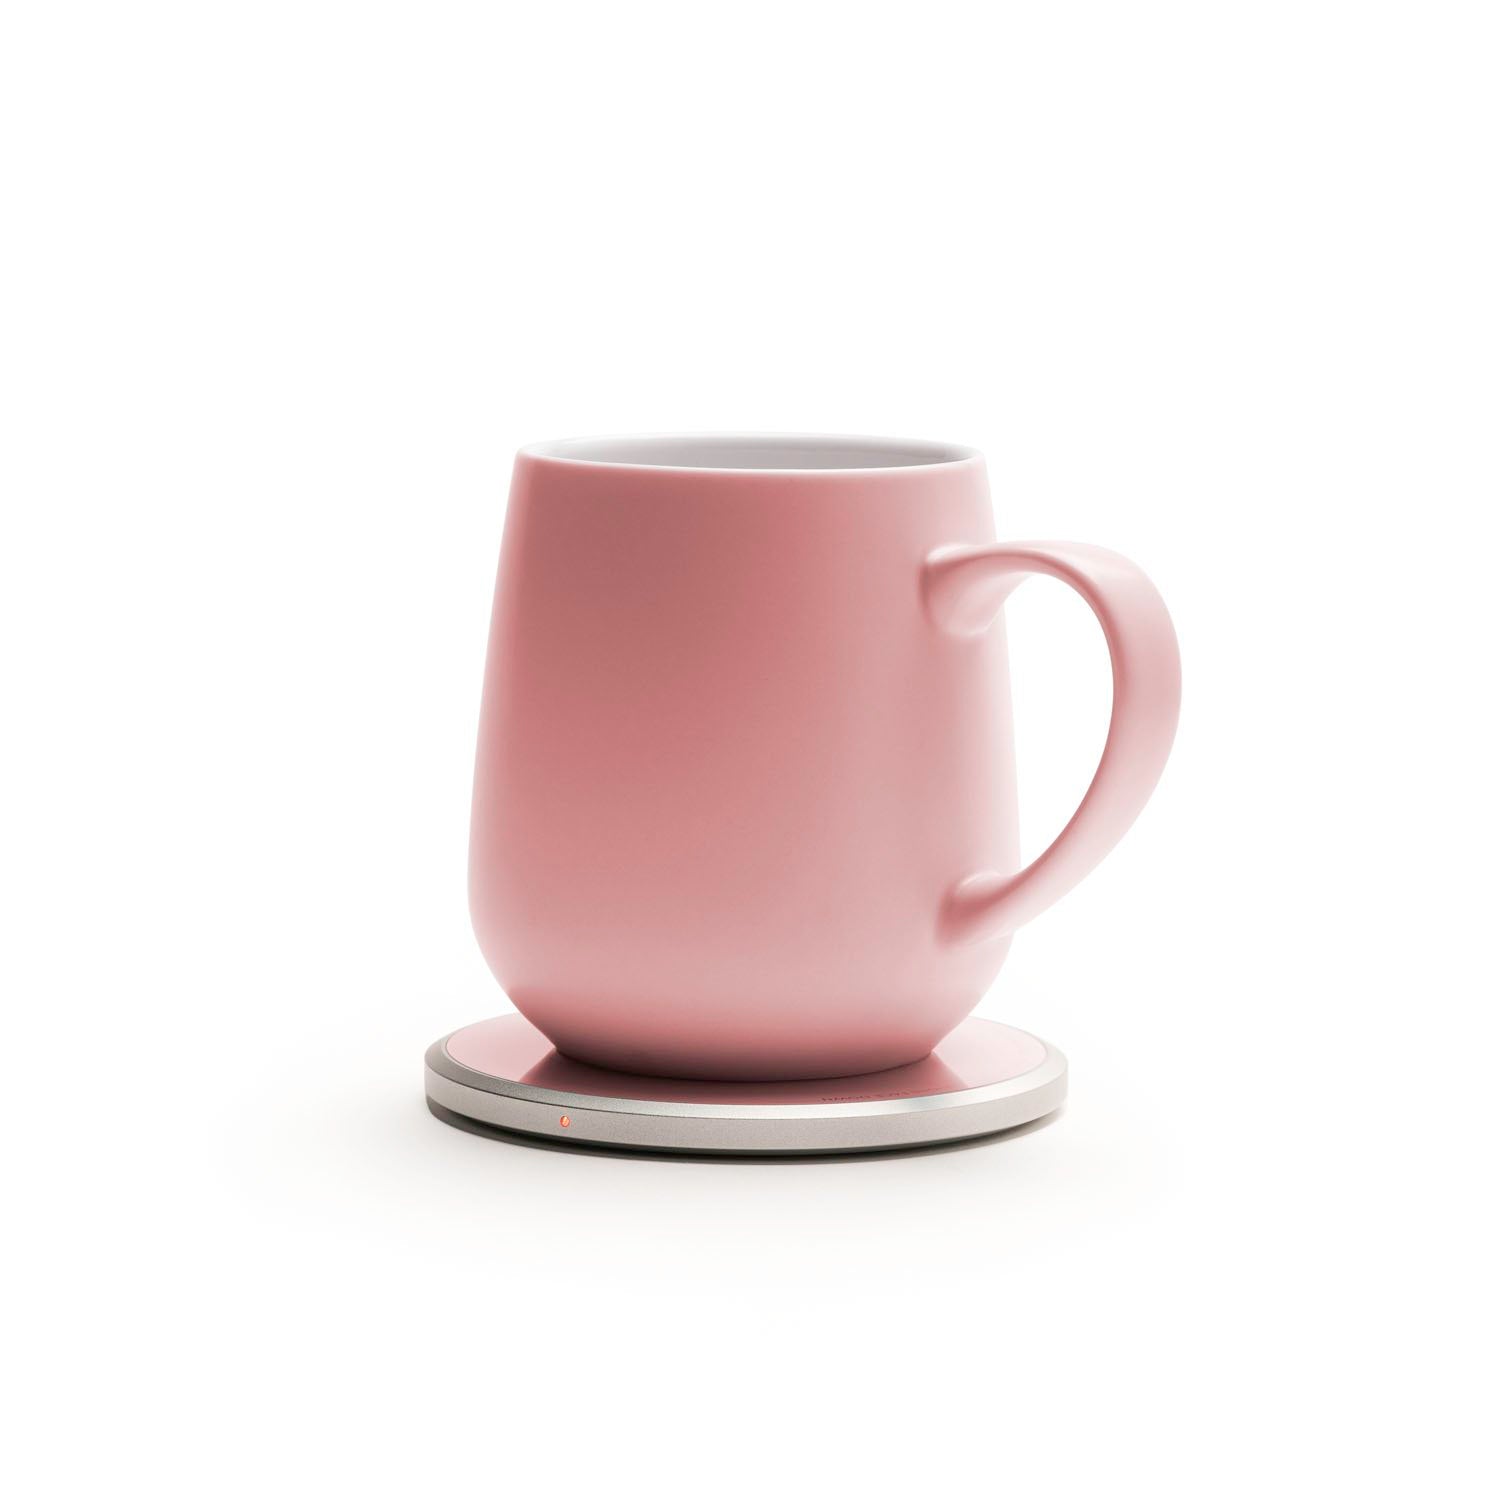 Pink mug on heating pad